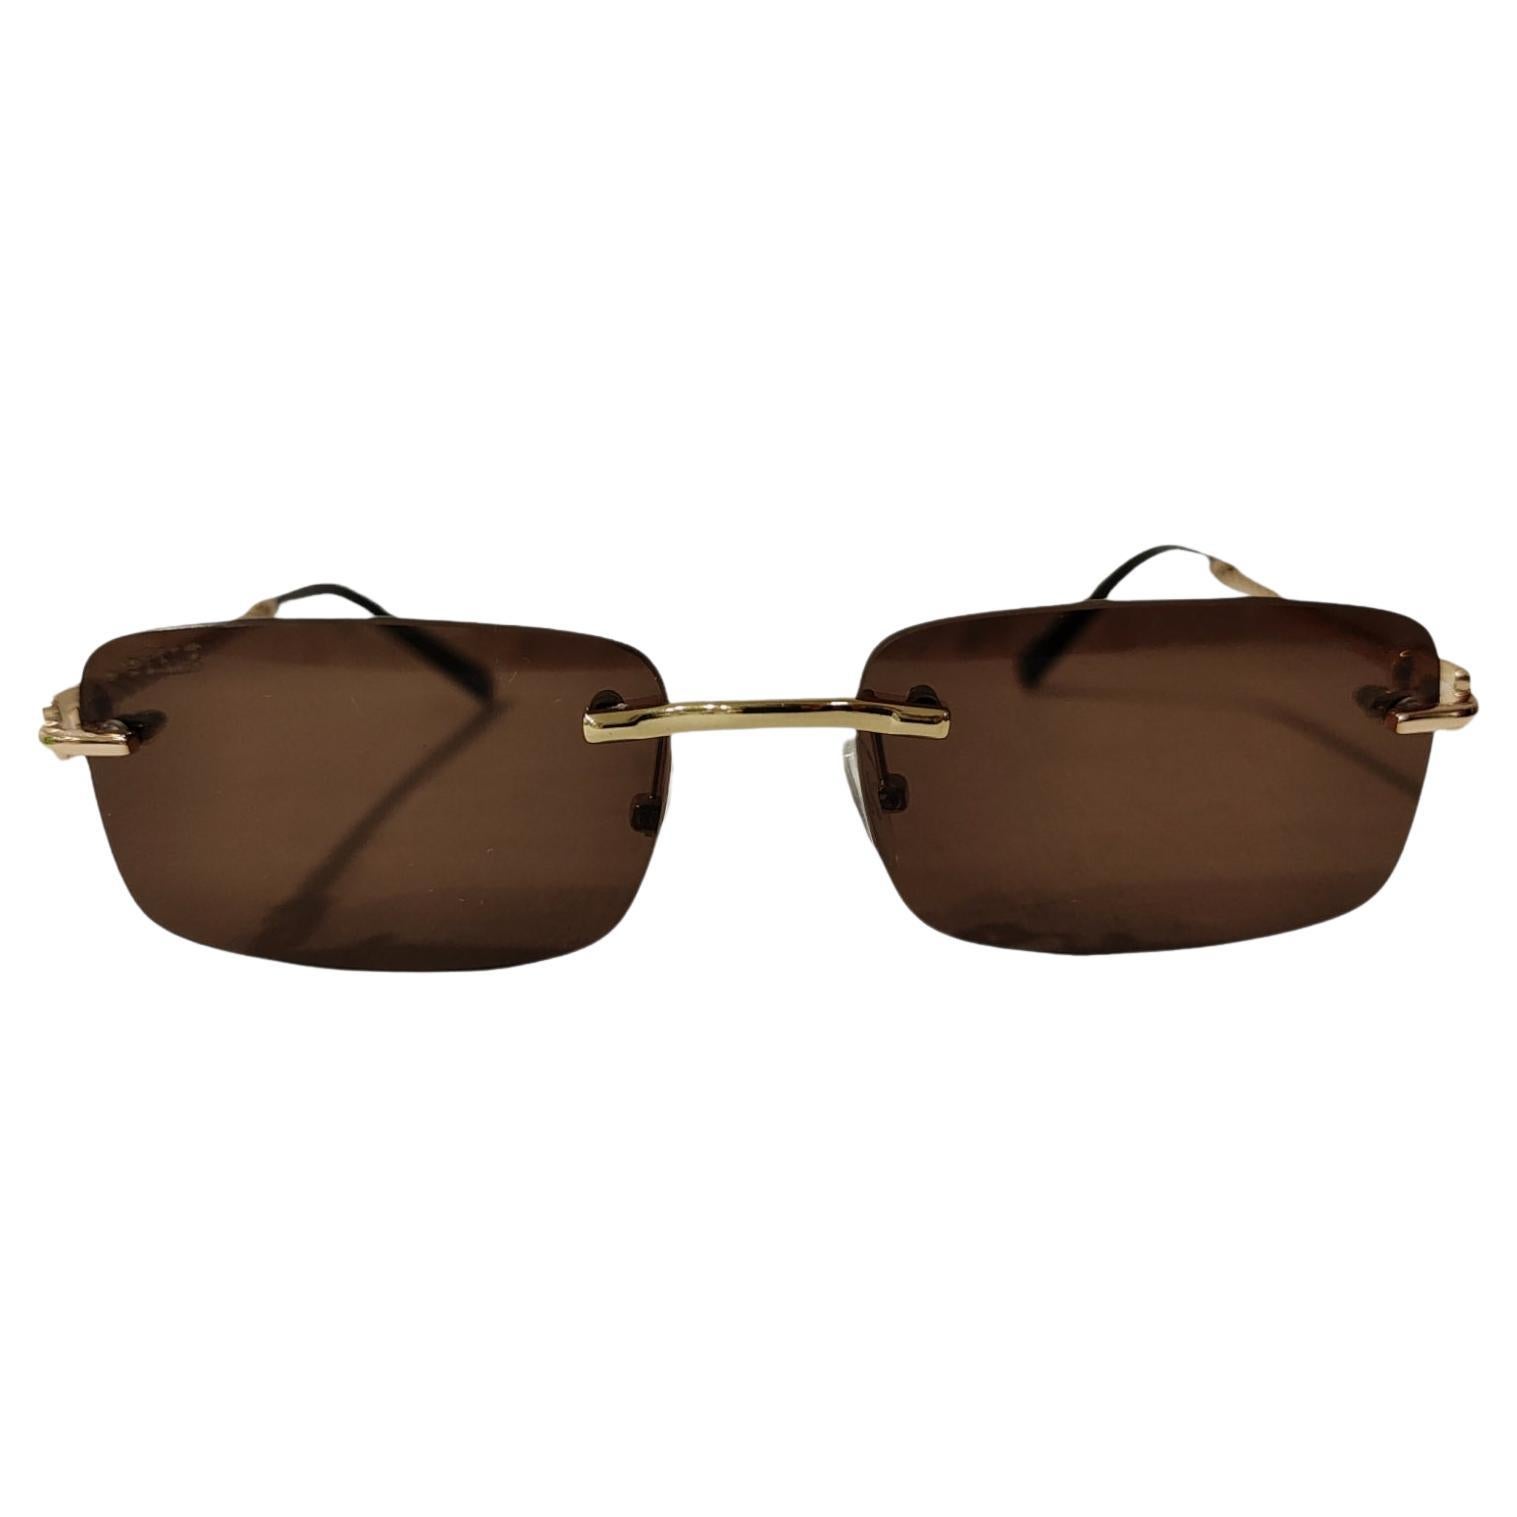 Brown gold handmade sunglasses NWOT